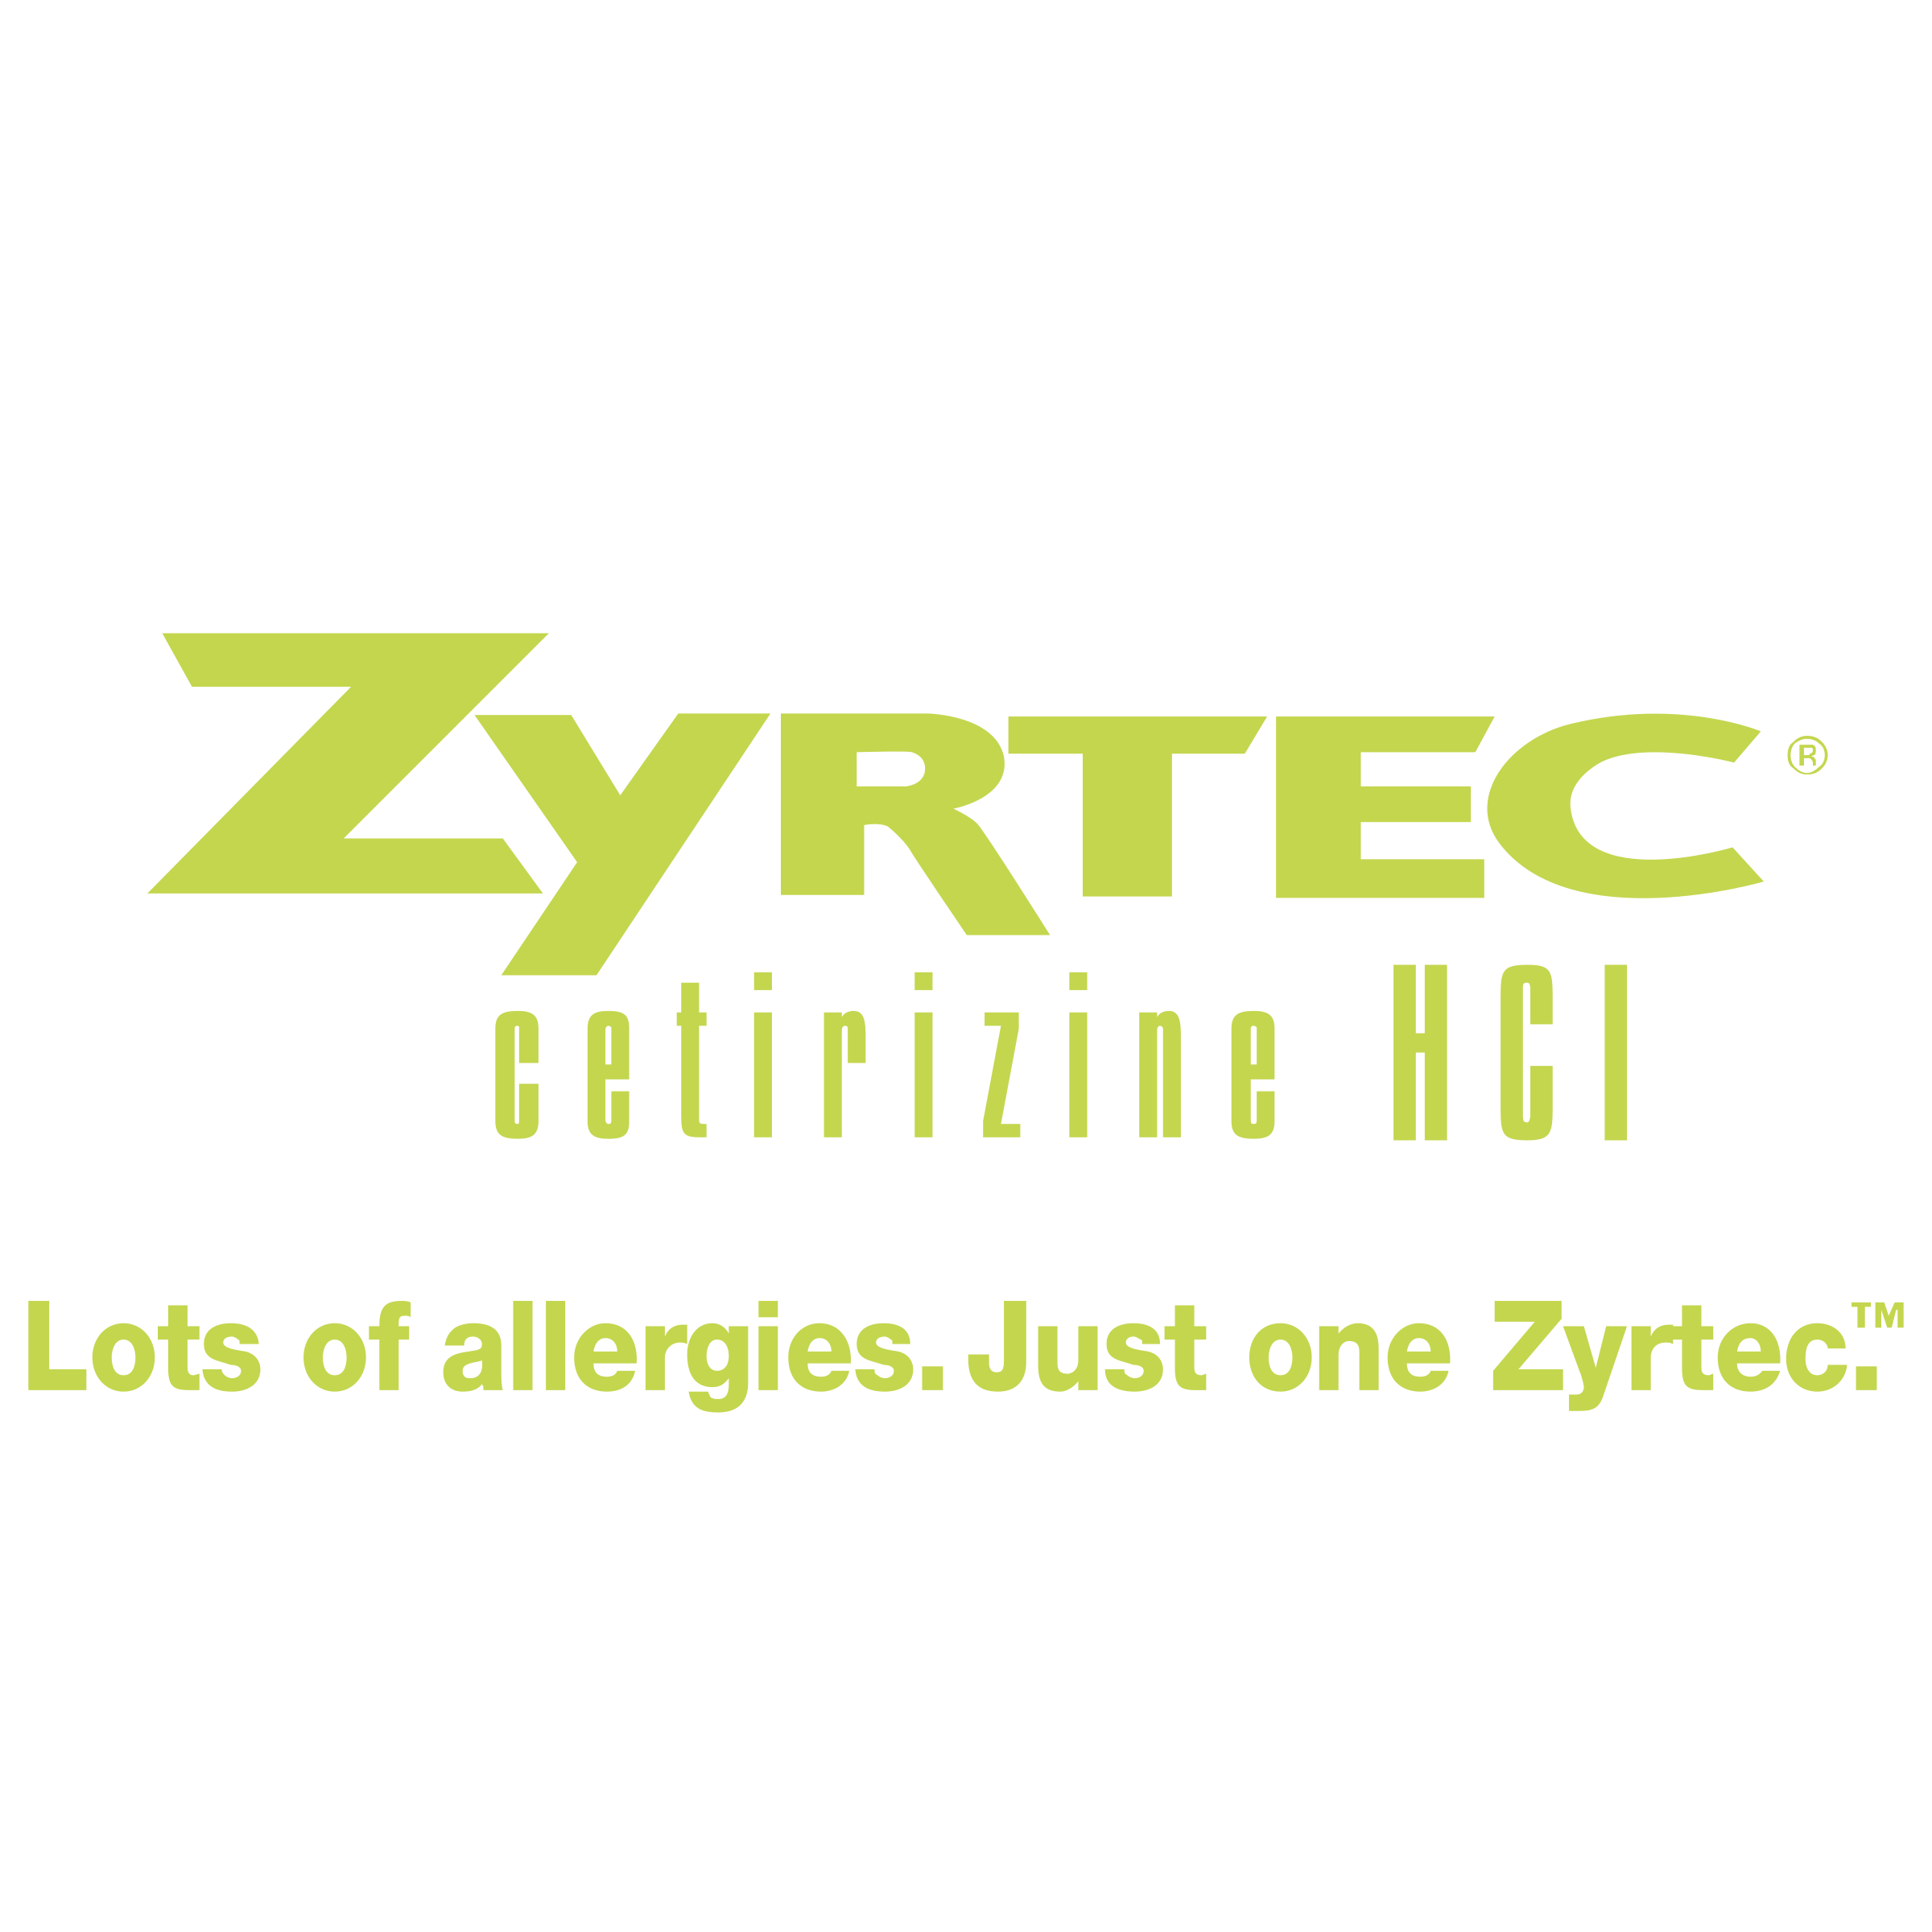 Zyrtec Logo - Zyrtec Logo PNG Transparent & SVG Vector - Freebie Supply